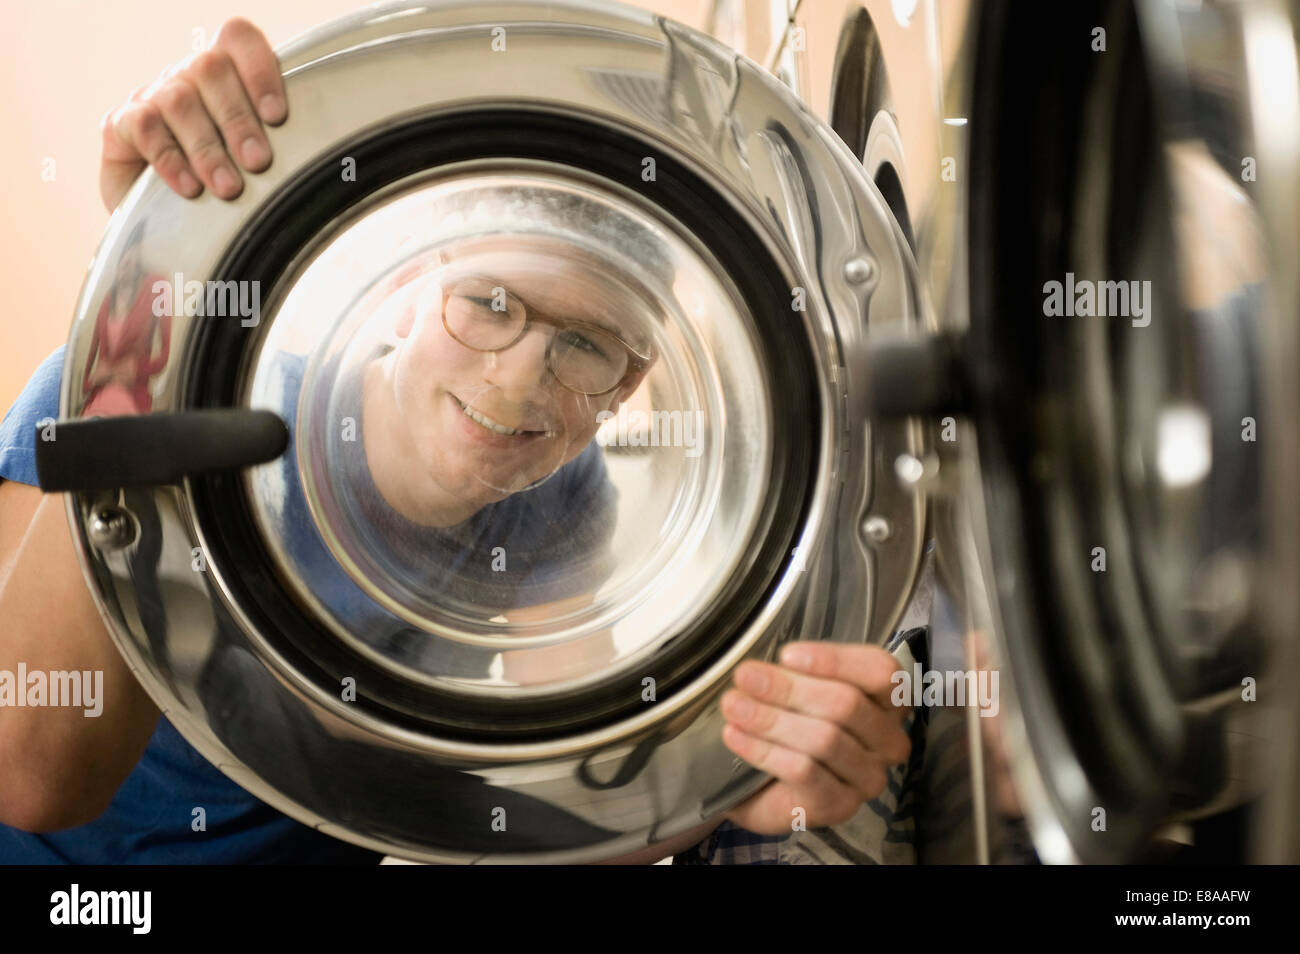 Young man looking through window of washing machine, smiling Stock Photo